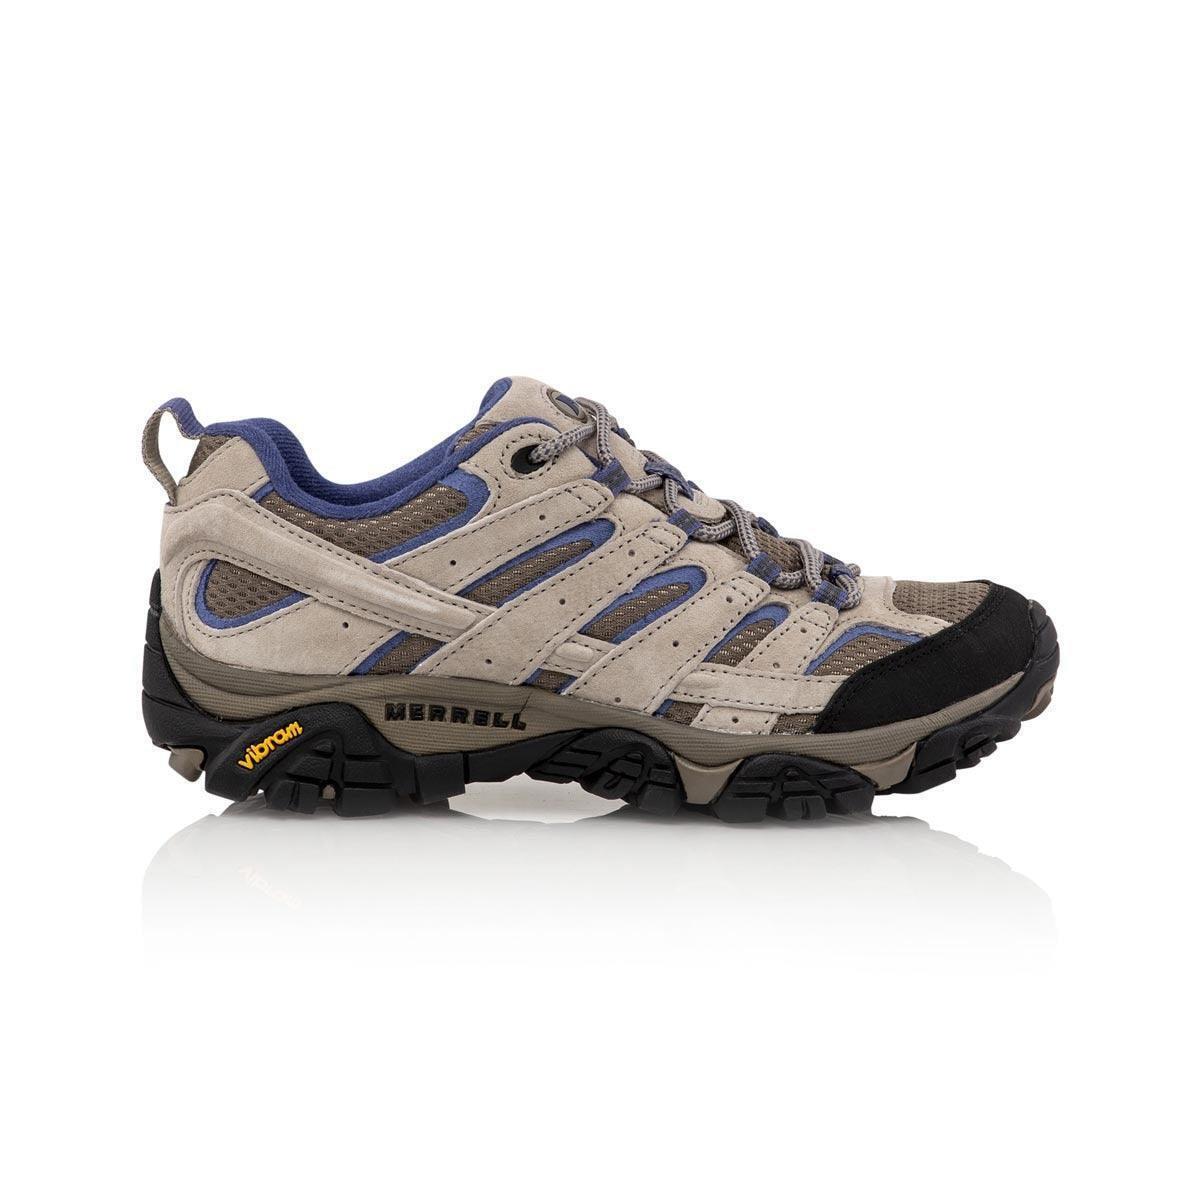 Merrell - Moab 2 Ventilator Hiking Shoes - Womens US 10.5 / Standard - Aluminum/Marlin